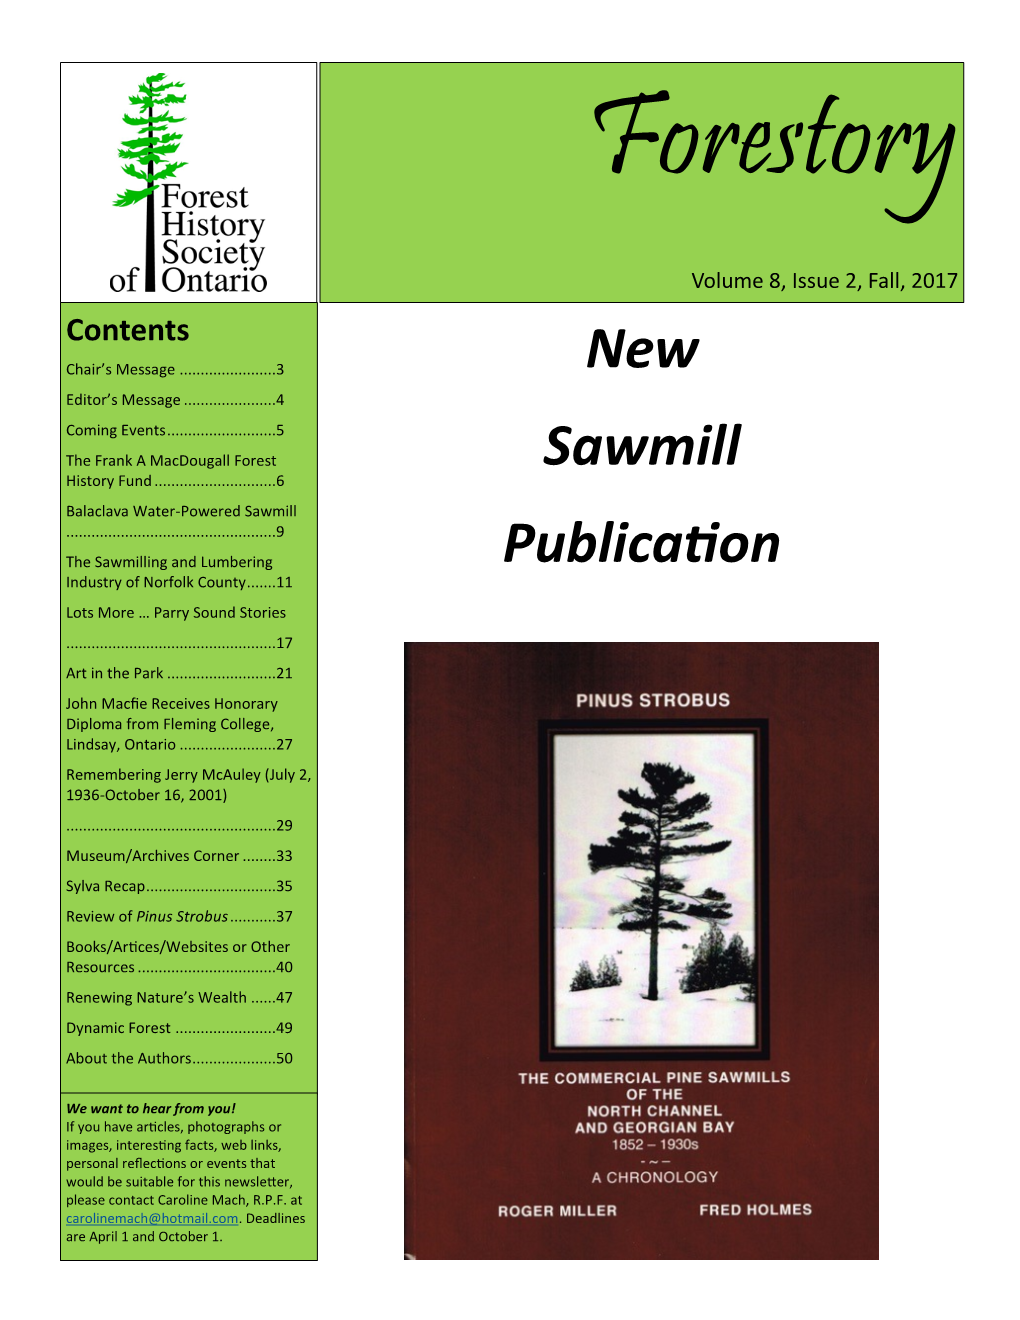 New Sawmill Publication